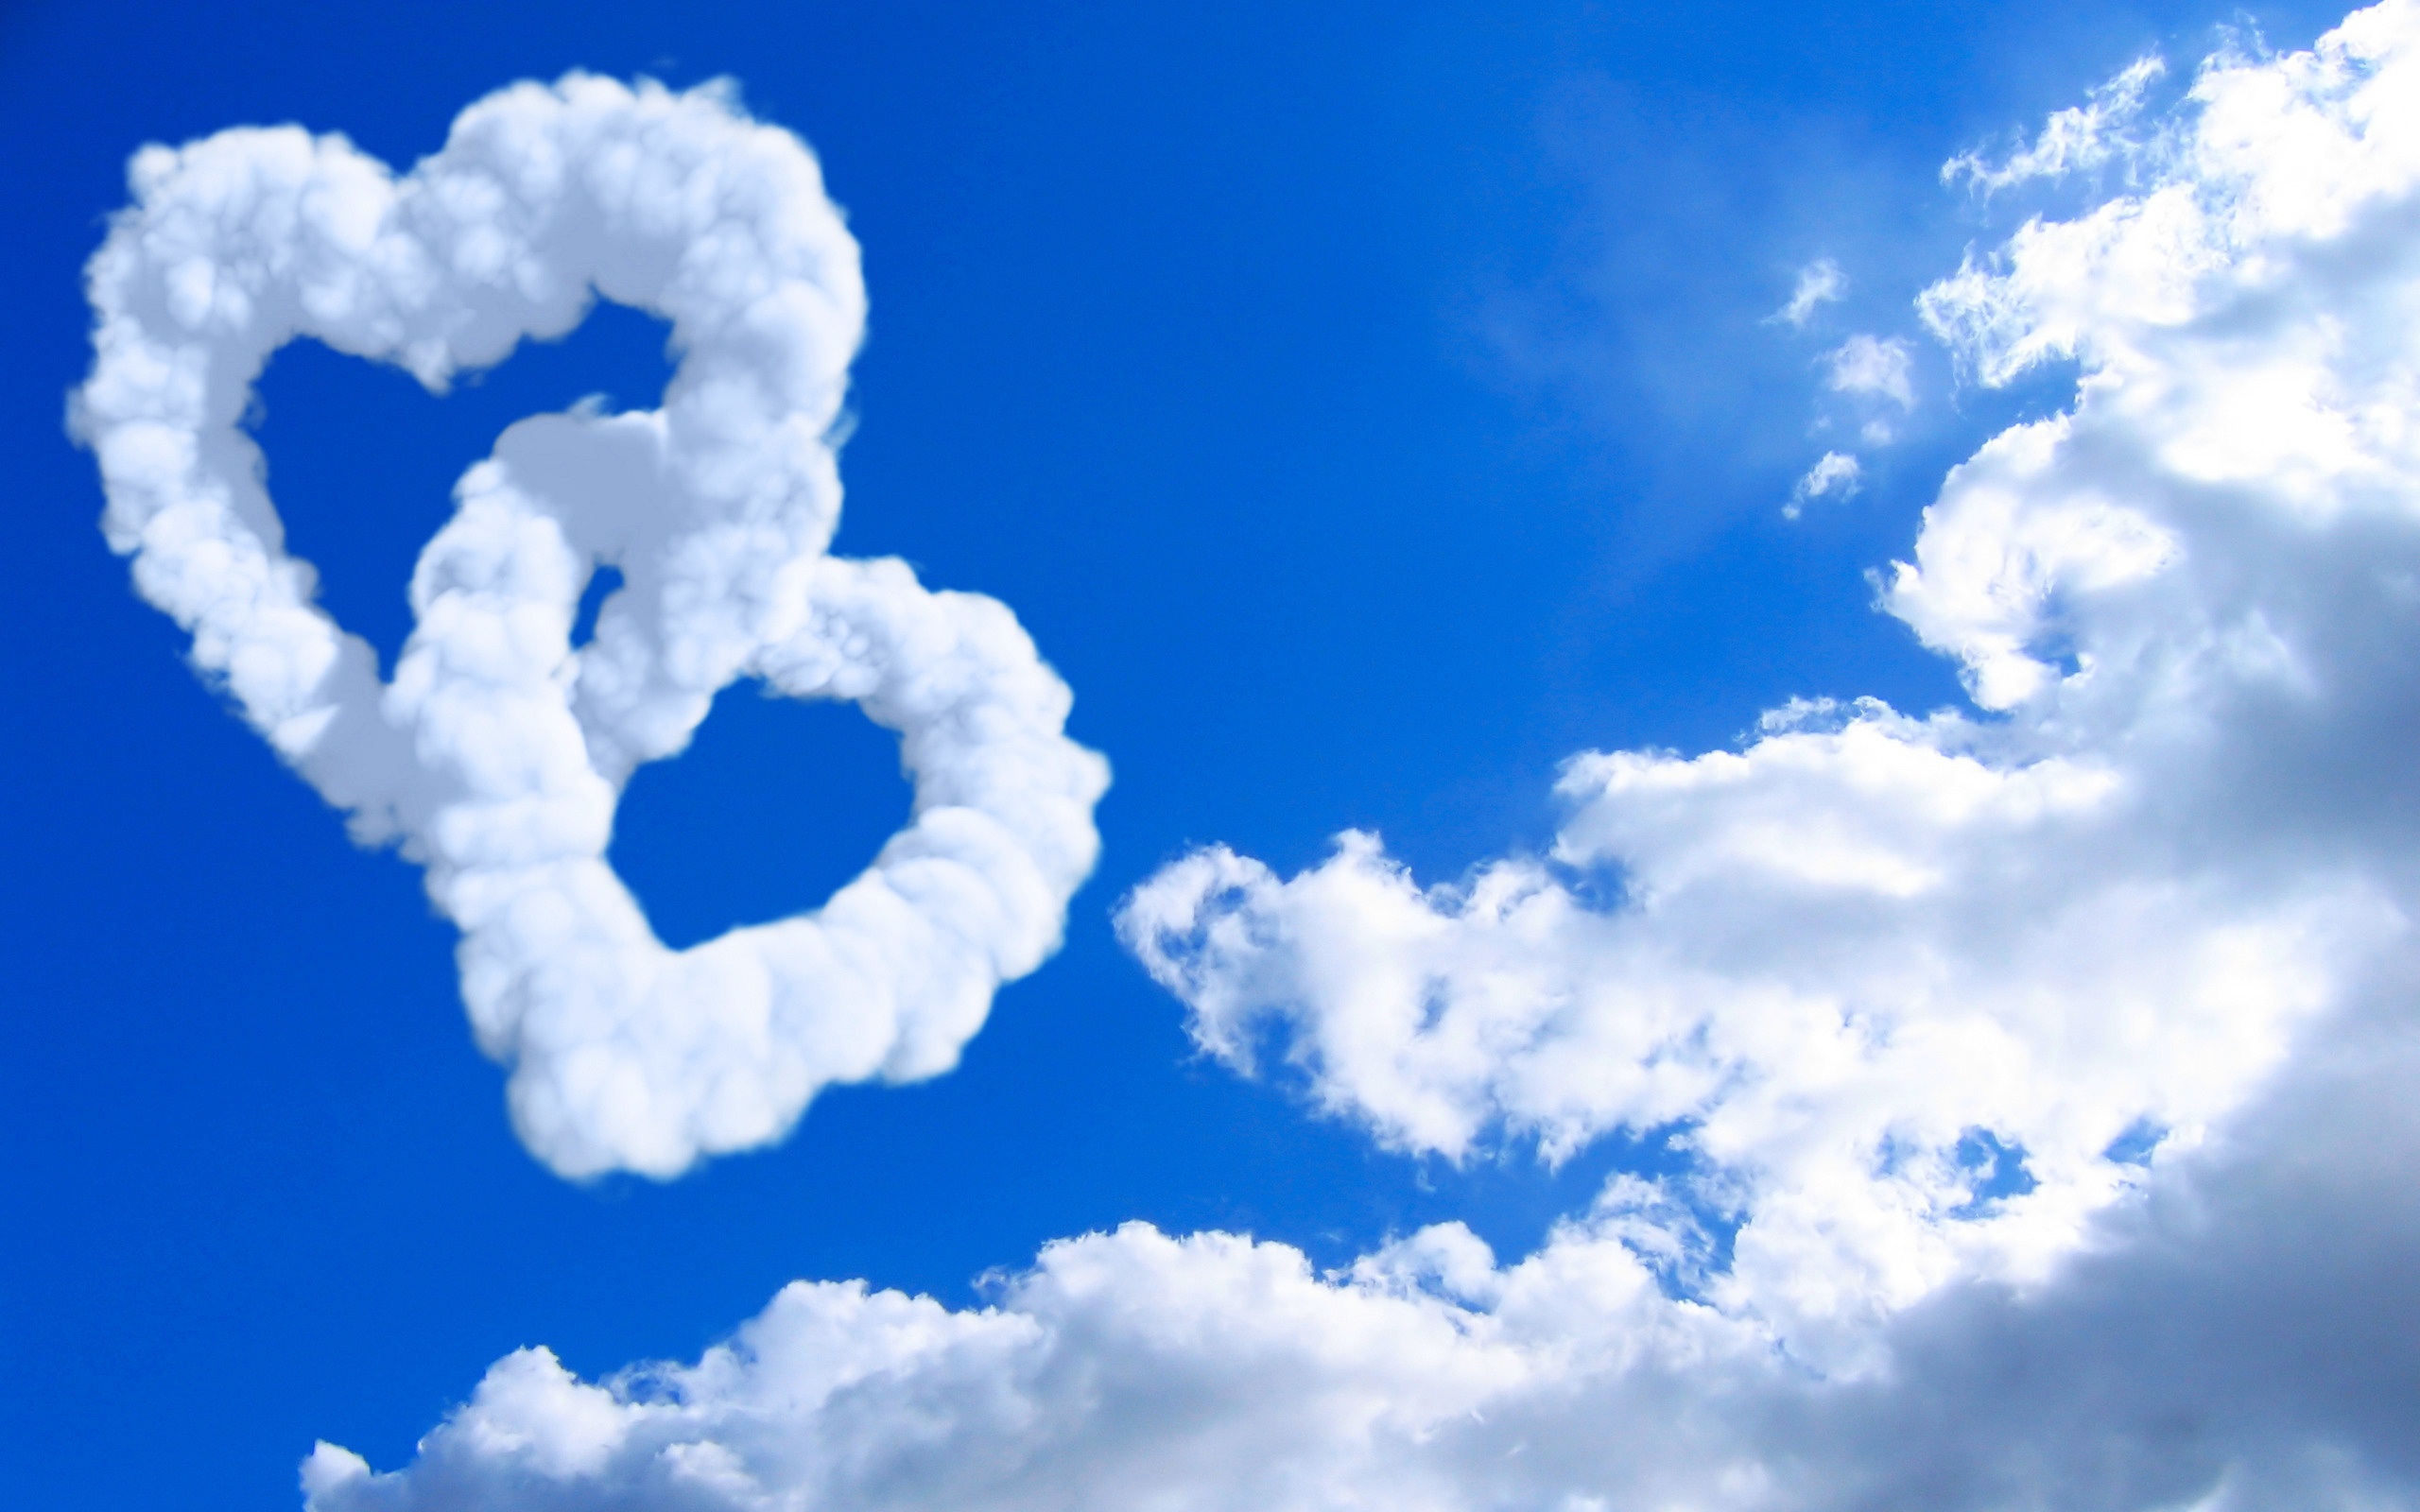 Hearts In Clouds HD Wallpaper For Desktop